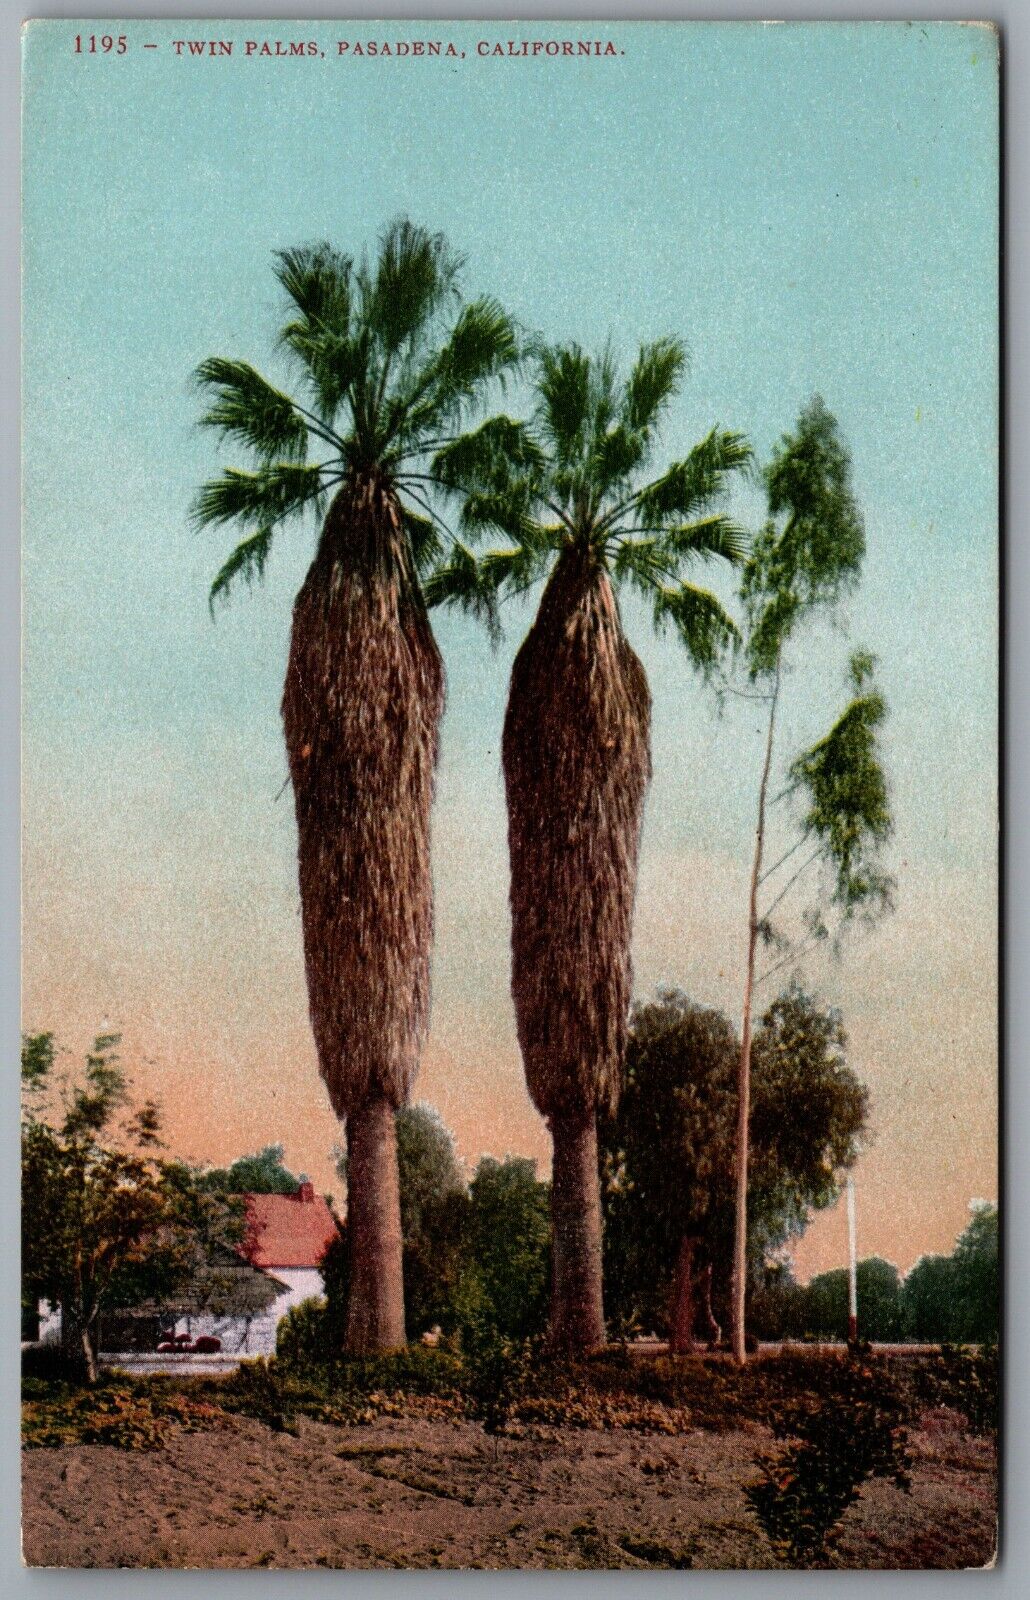 Twin Palms Pasadena CA Postcard c1910s Edward Mitchell No. 1195